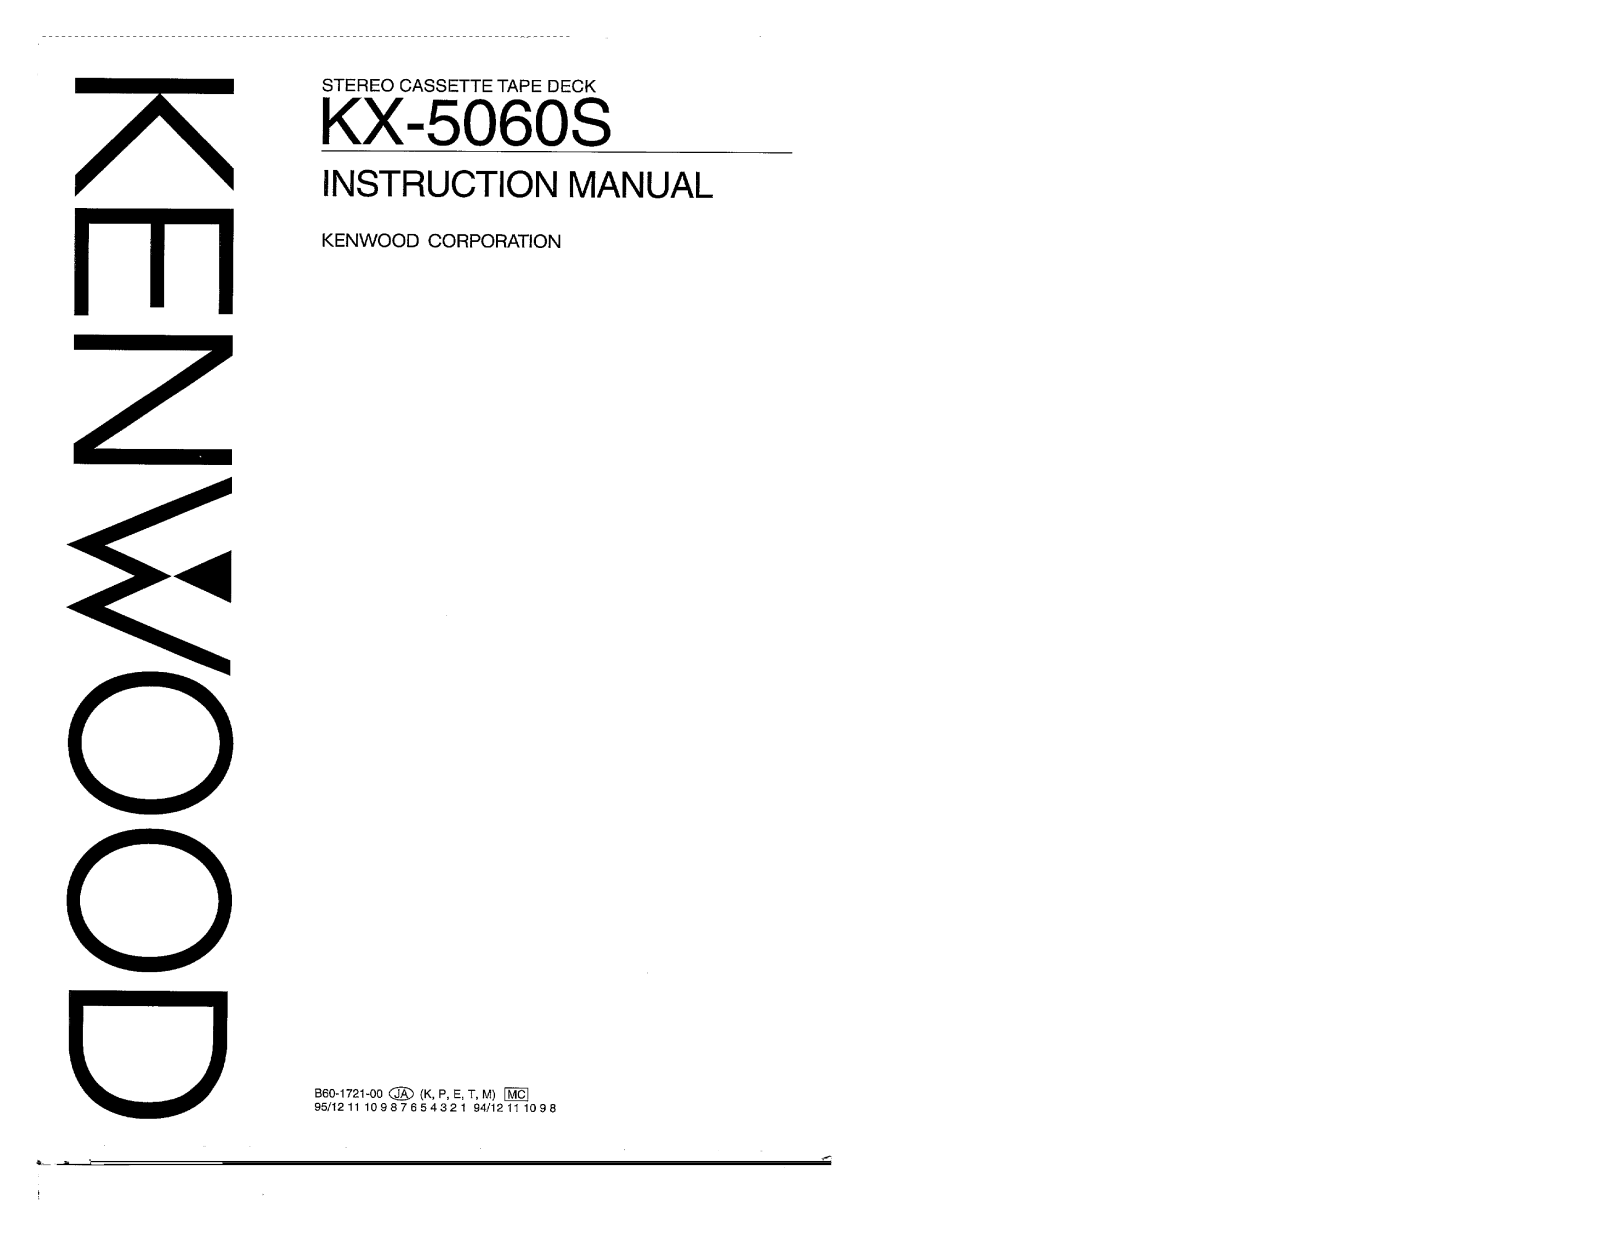 Kenwood KX-5060S Owner's Manual